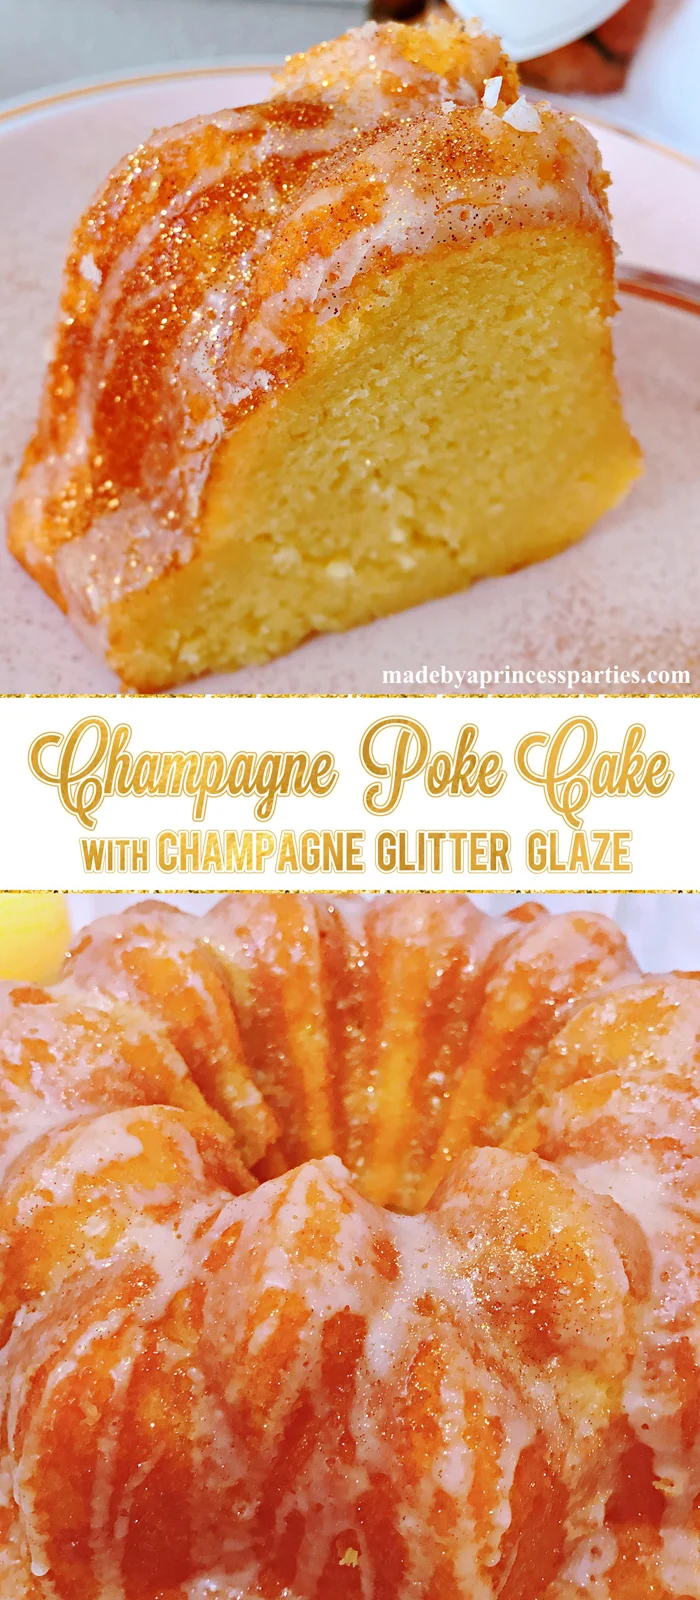 Champagne Poke Cake with Decadent Champagne Glitter Glaze